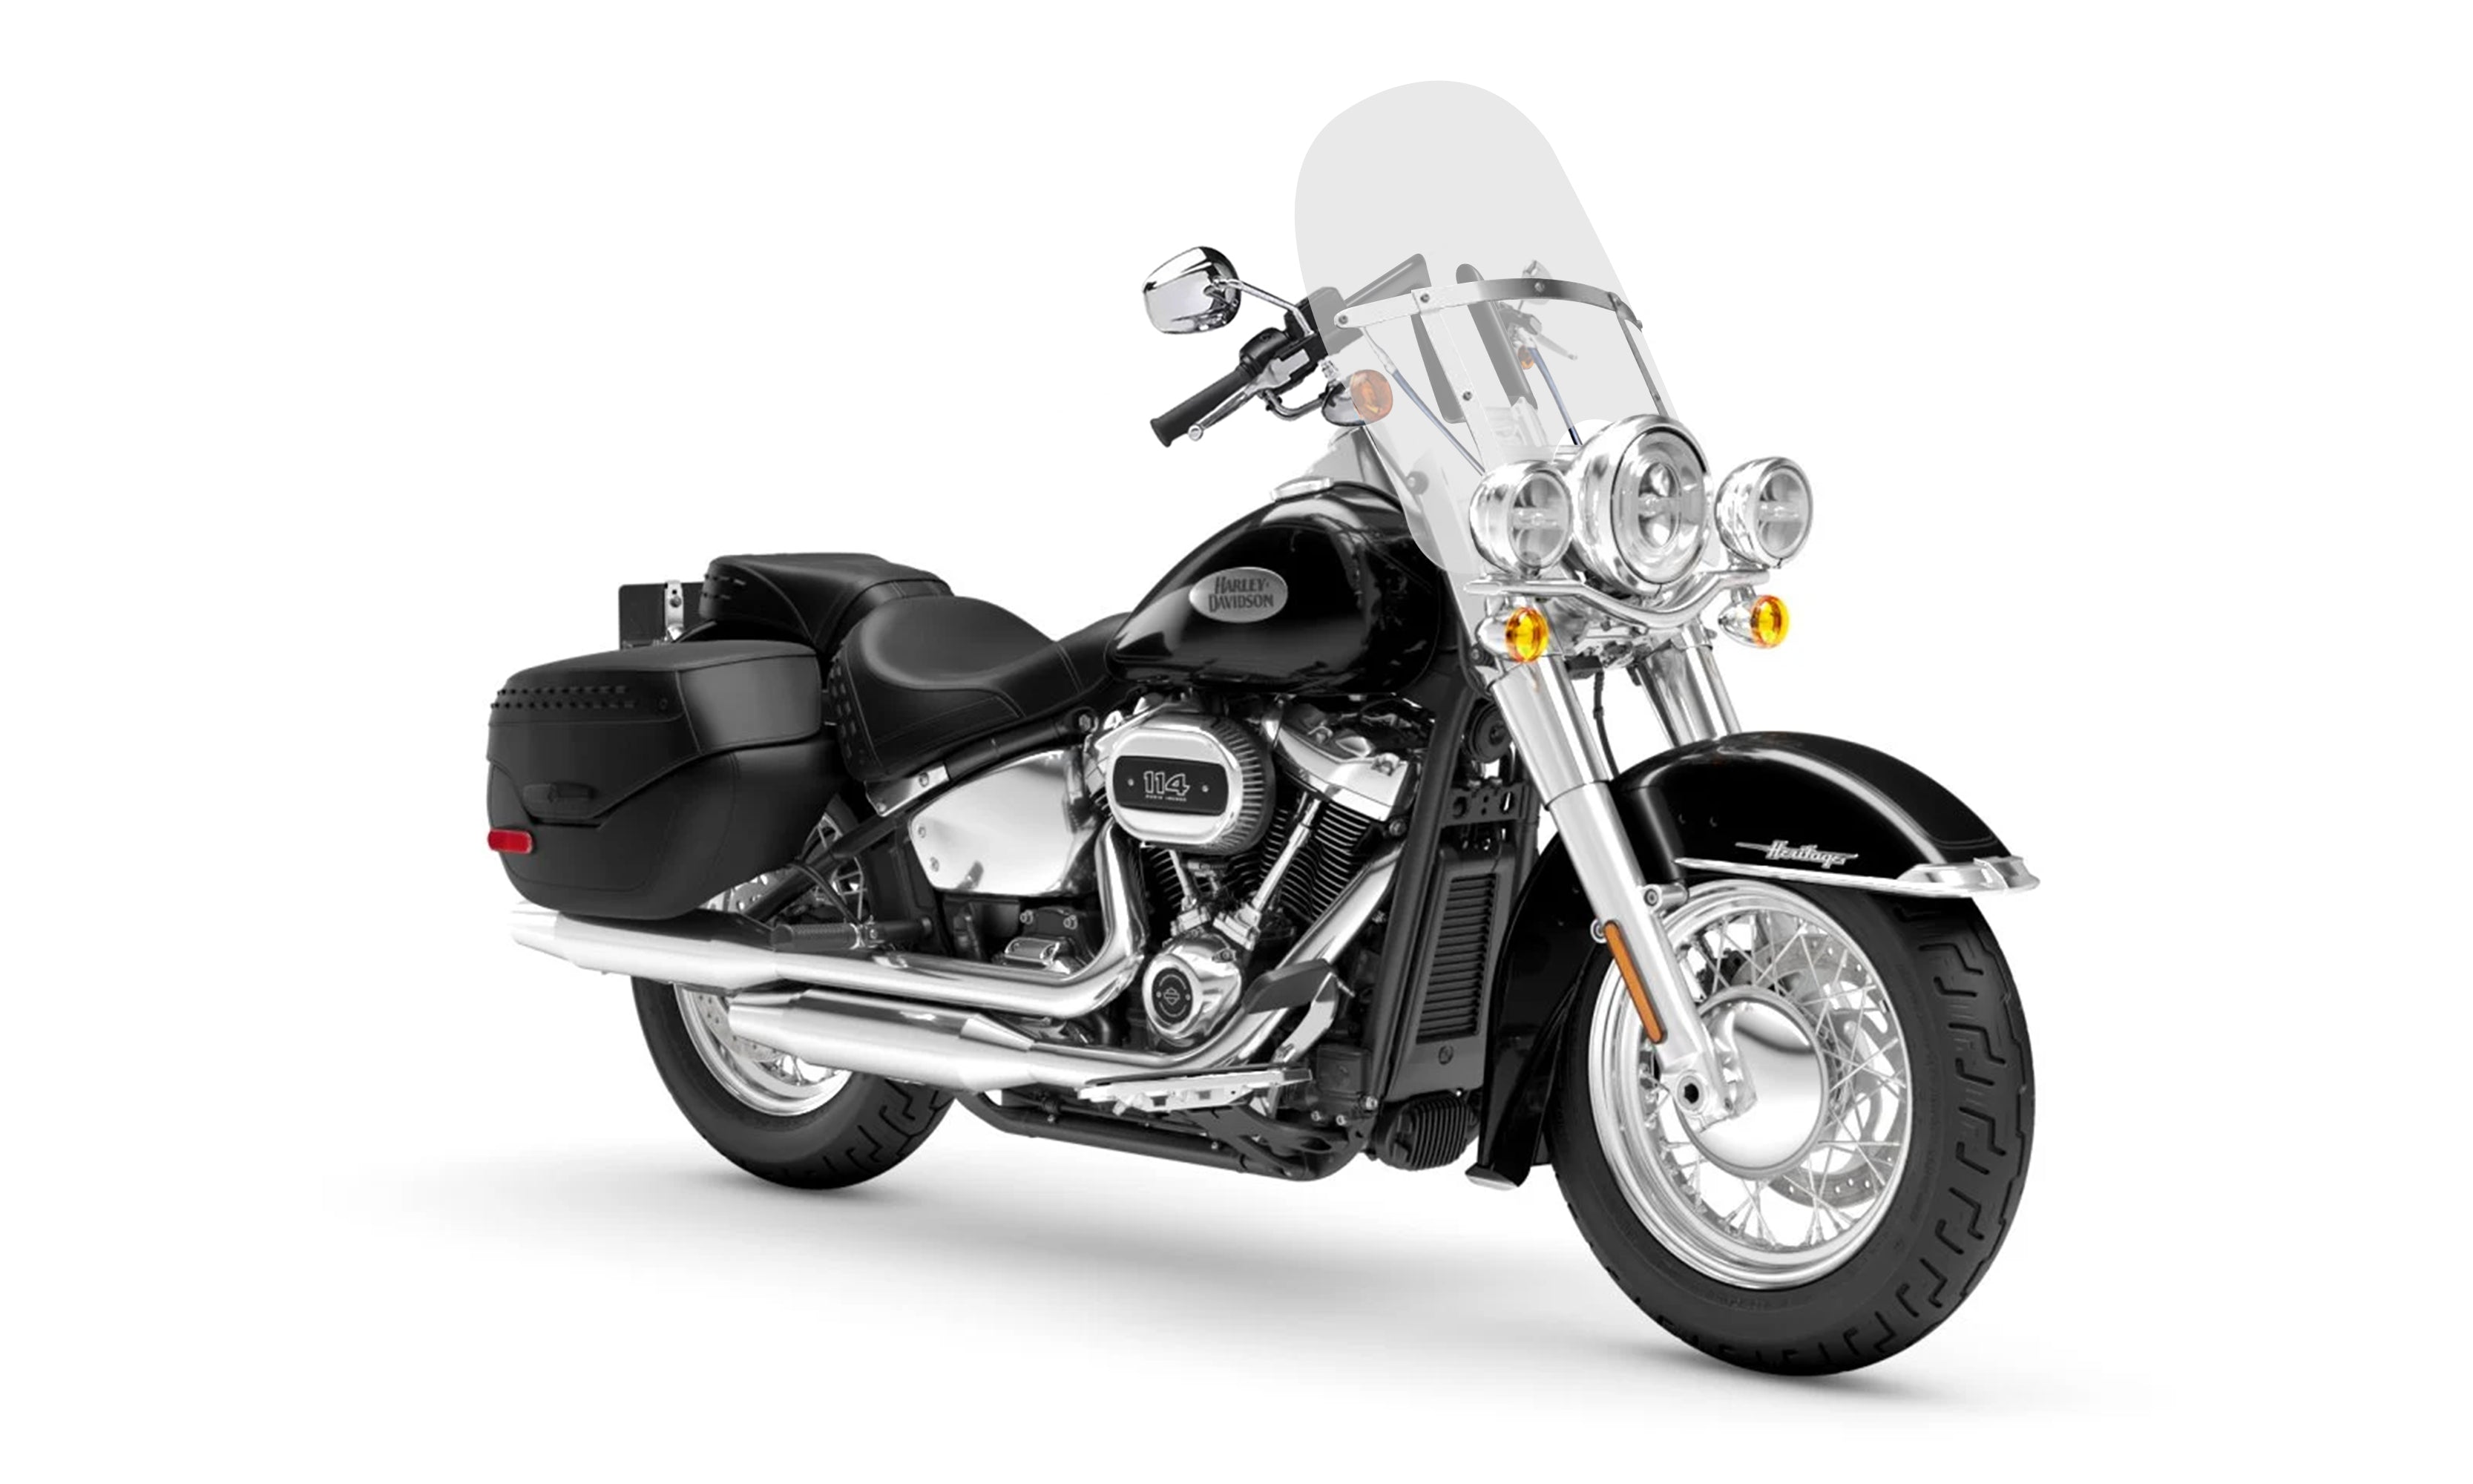 Viking Iron Born Z Handlebar For Harley Softail Heritage Classic FLSTC Gloss Black Bag on Bike View @expand